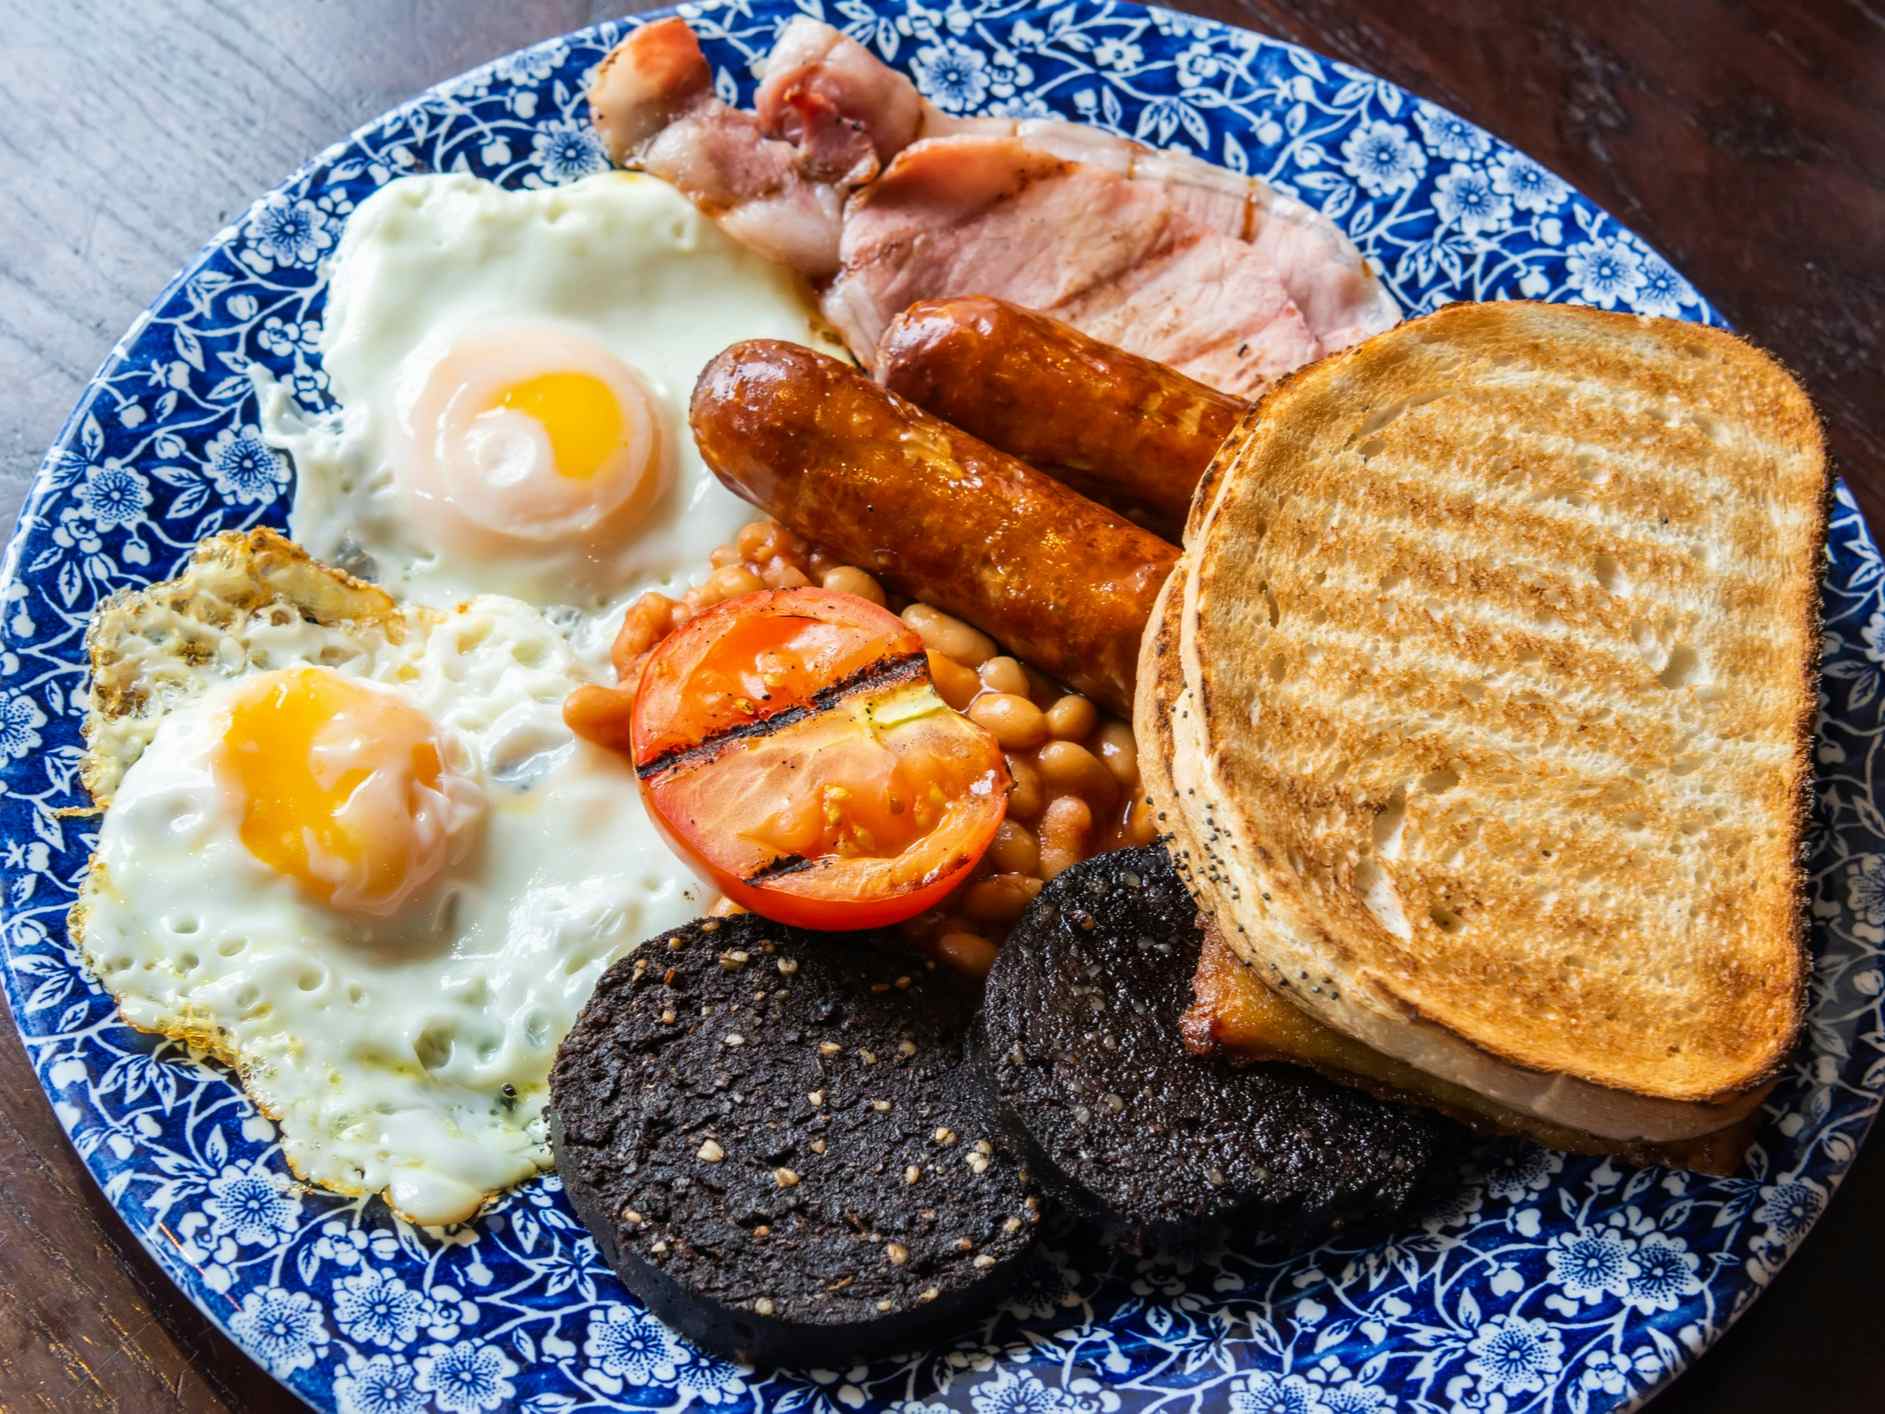 Scottish breakfast. Photo: getty ref 1315663970